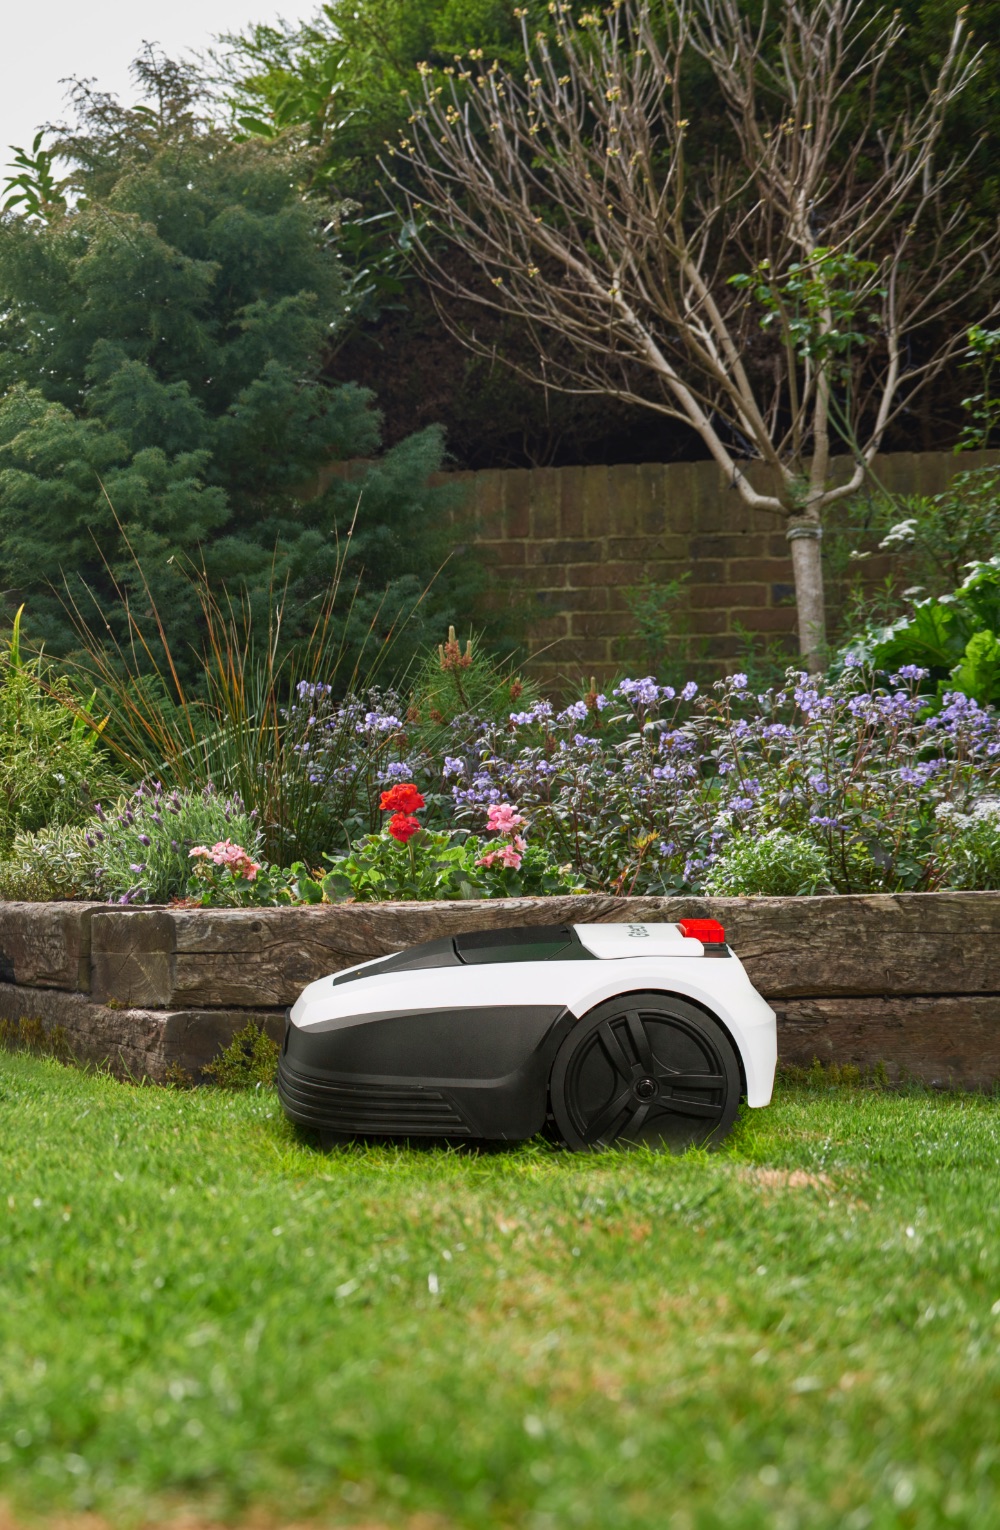 Robot lawnmower